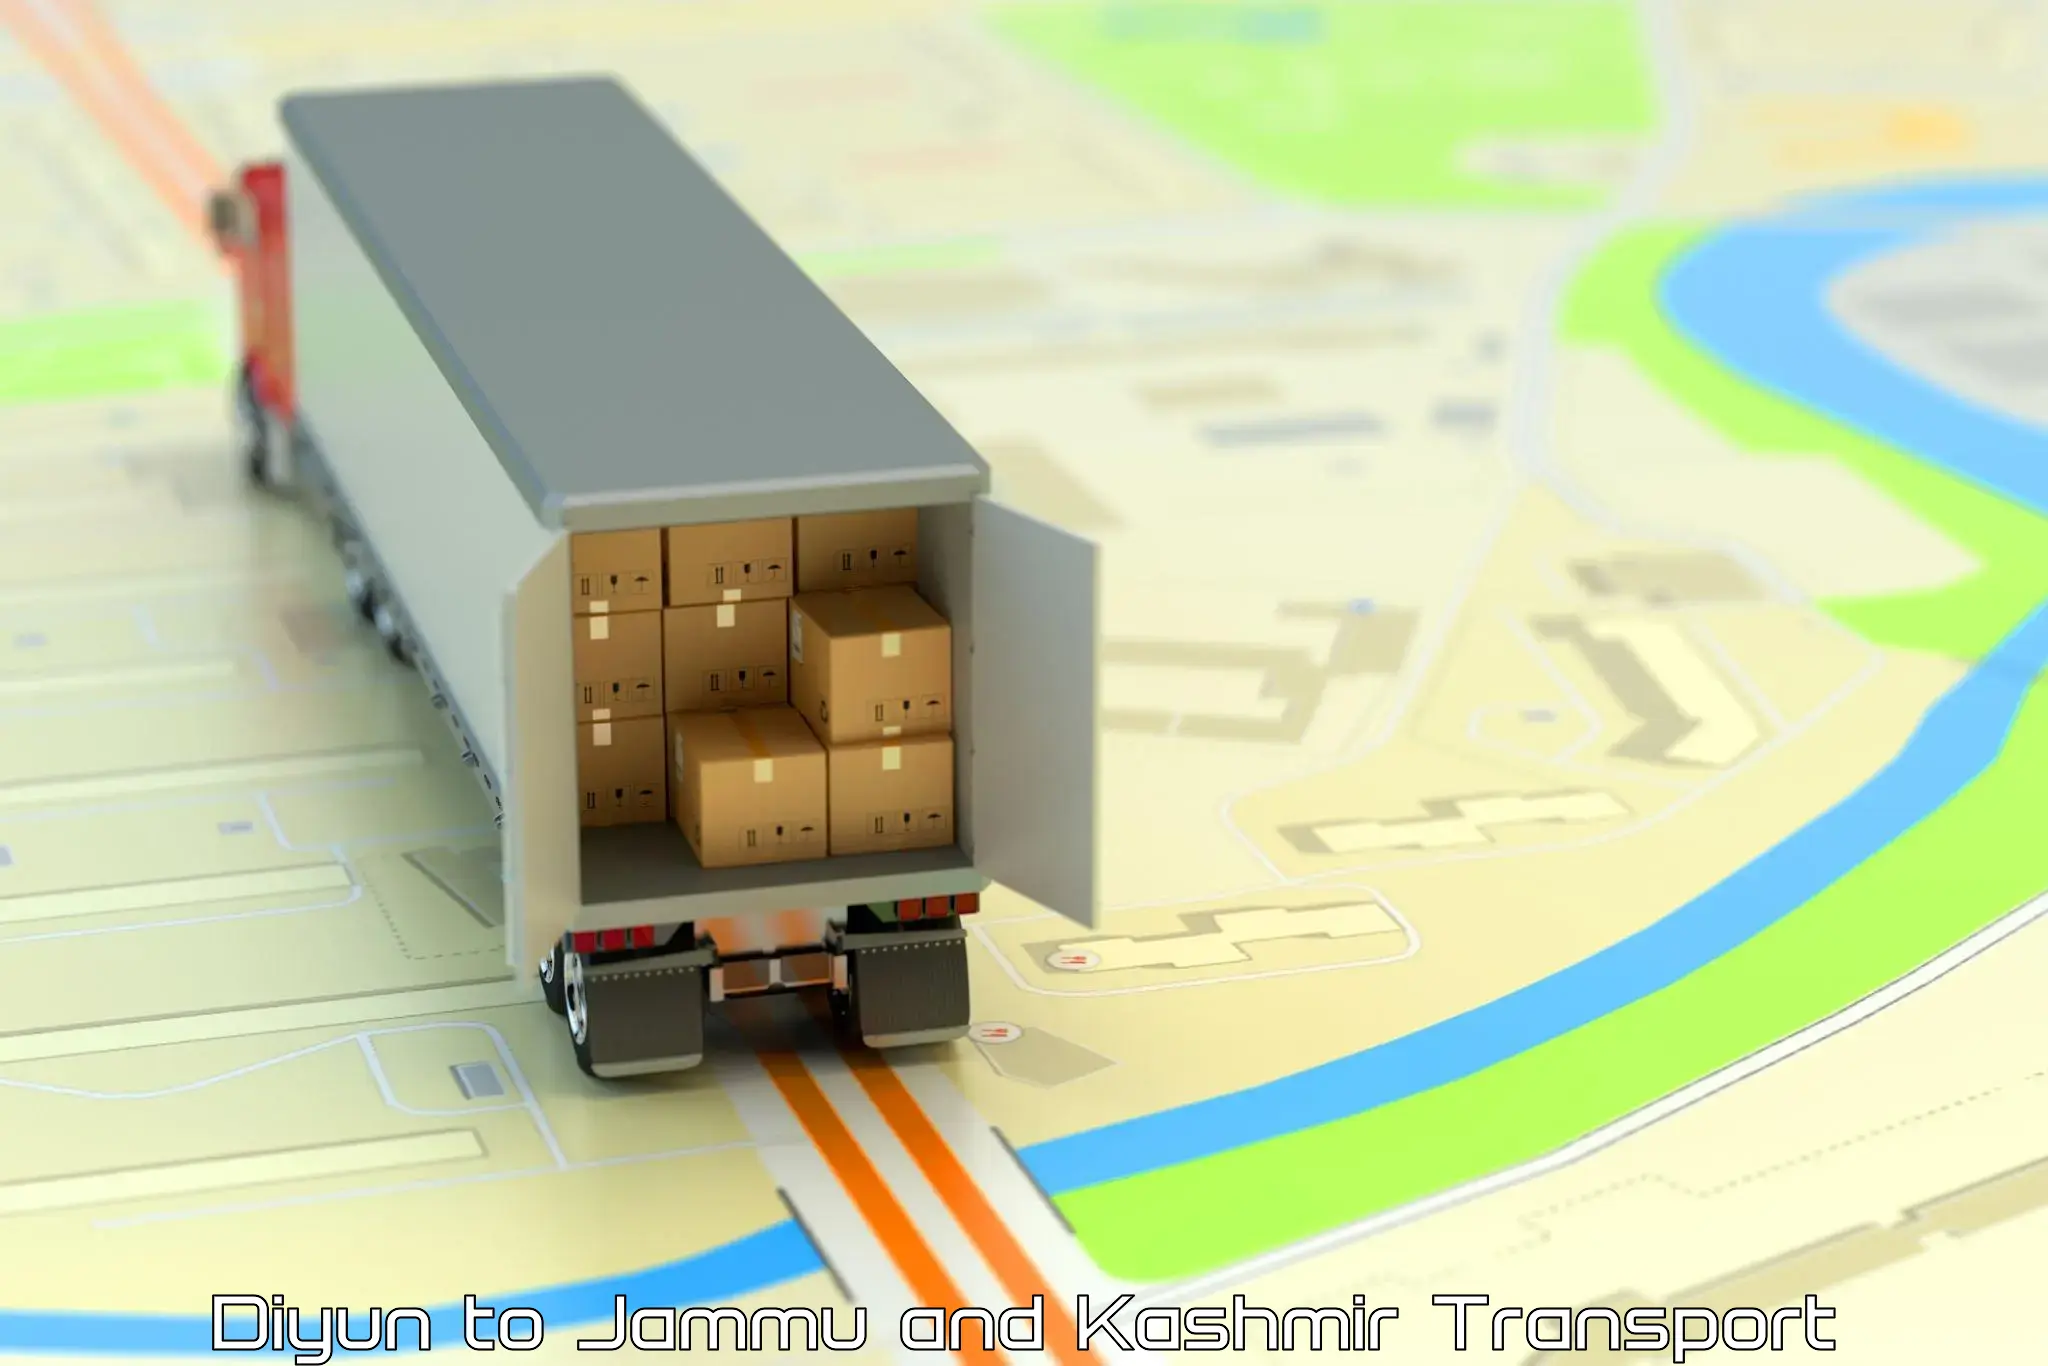 Container transport service Diyun to Sopore